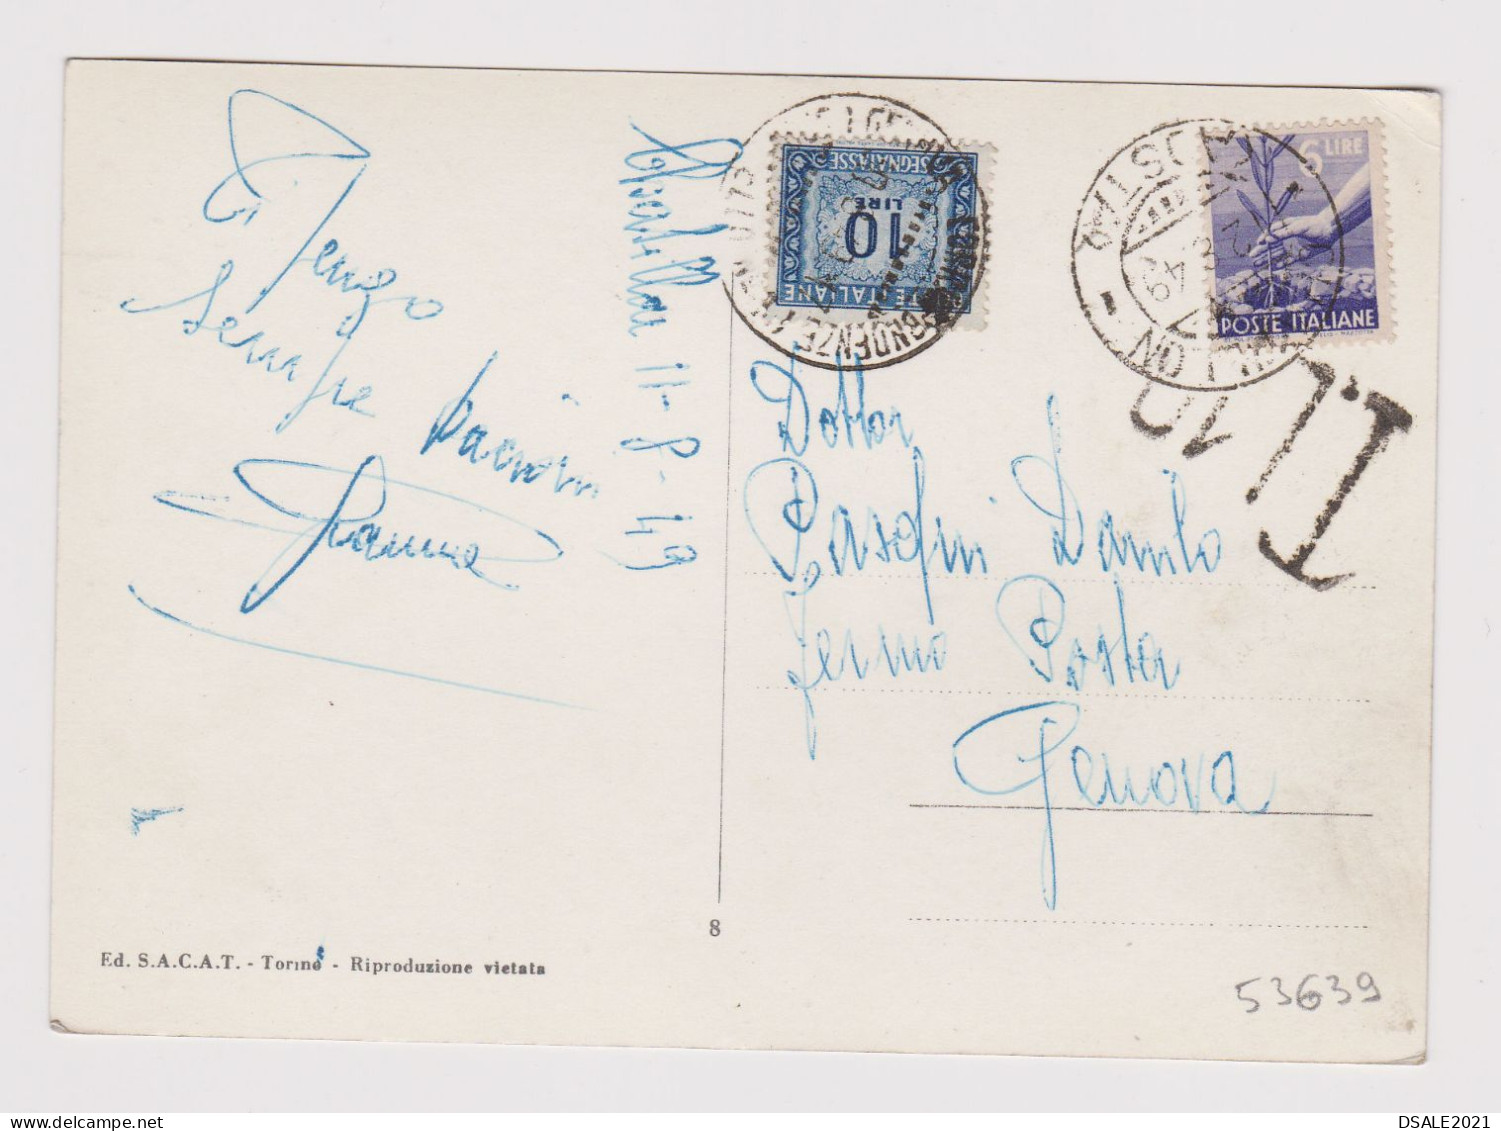 ITALY 1949 Pc W/6Lire Stamp AOSTA To GENOVA Postage Due 10Lire, Postcard St. VINCENT M.575 PIAZZALE DELLA FONTE /53639 - 1946-60: Marcophilie